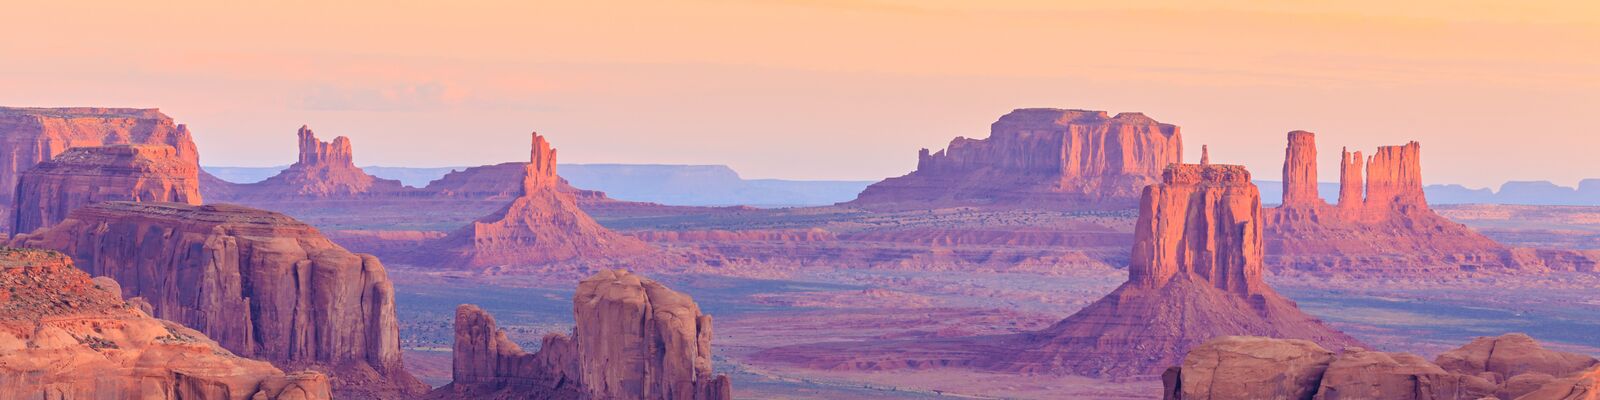 Sonnenuntergang im Monument Valley, Arizona